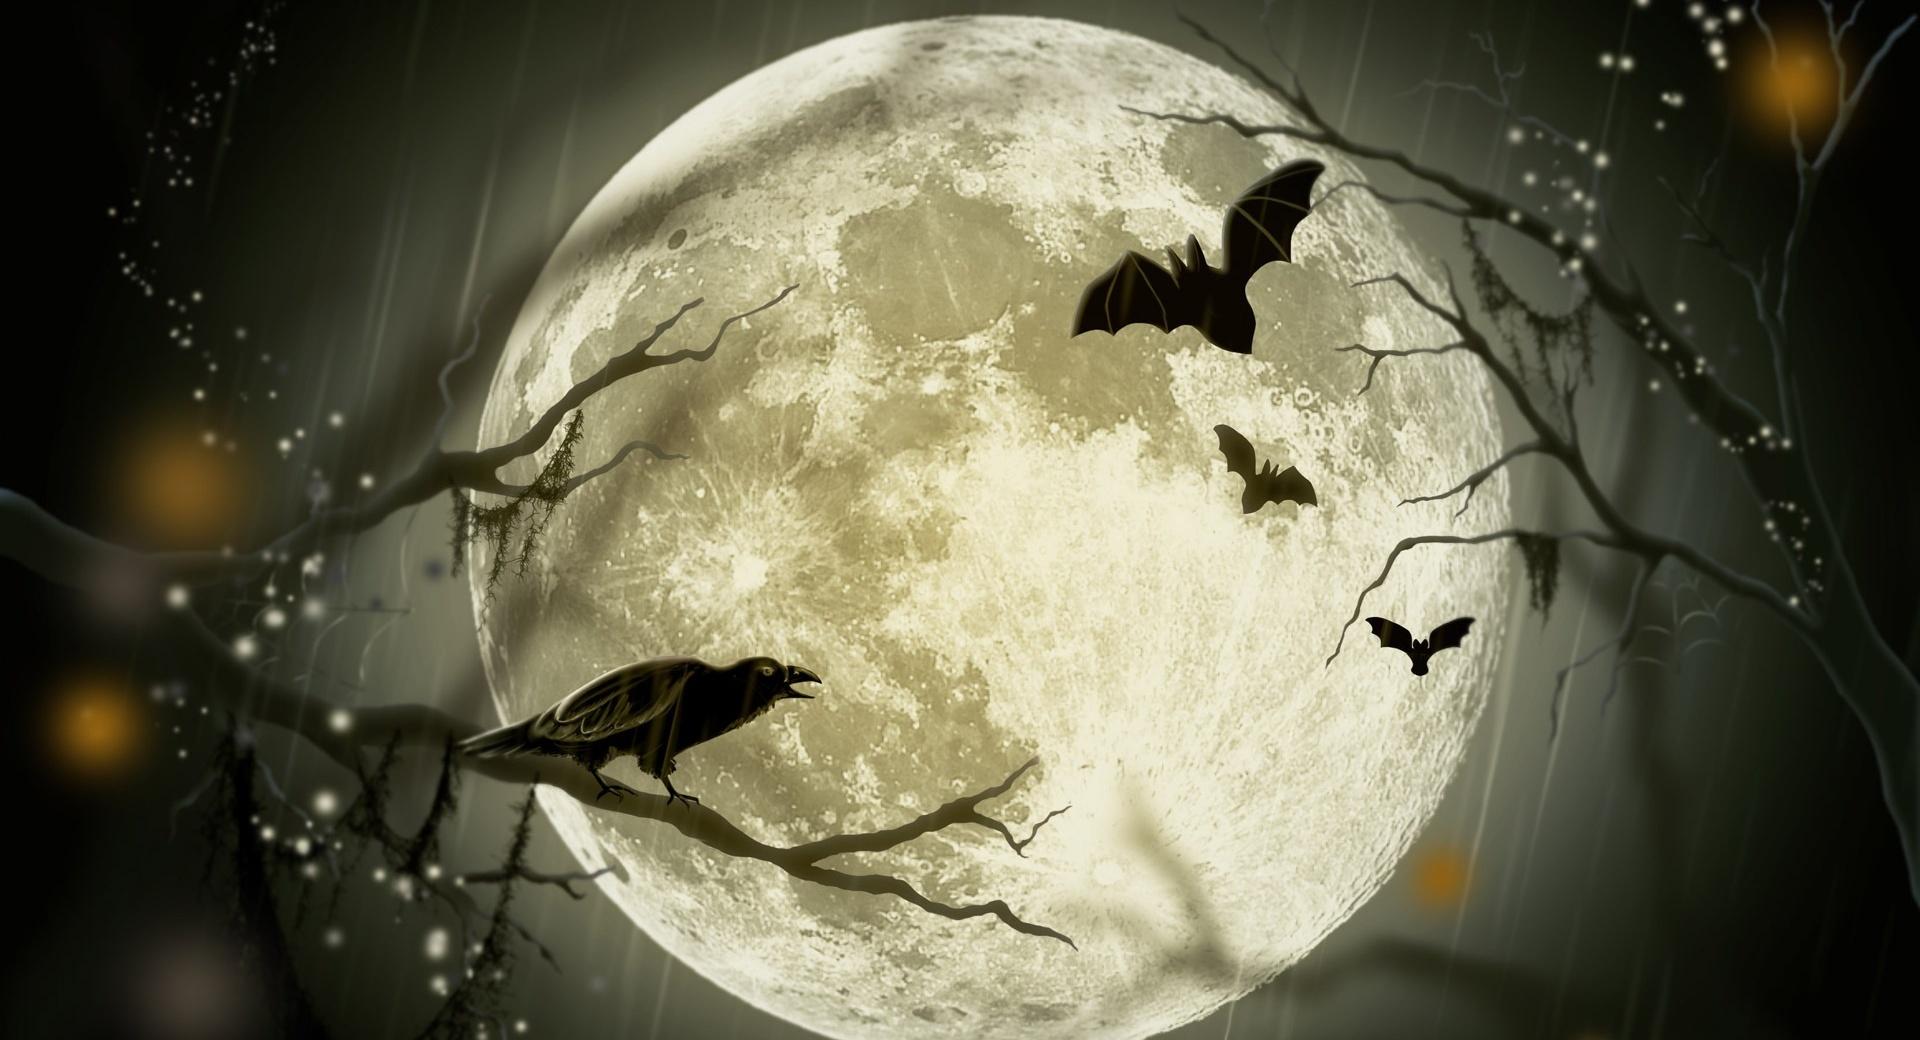 Halloween Moon at 1024 x 1024 iPad size wallpapers HD quality